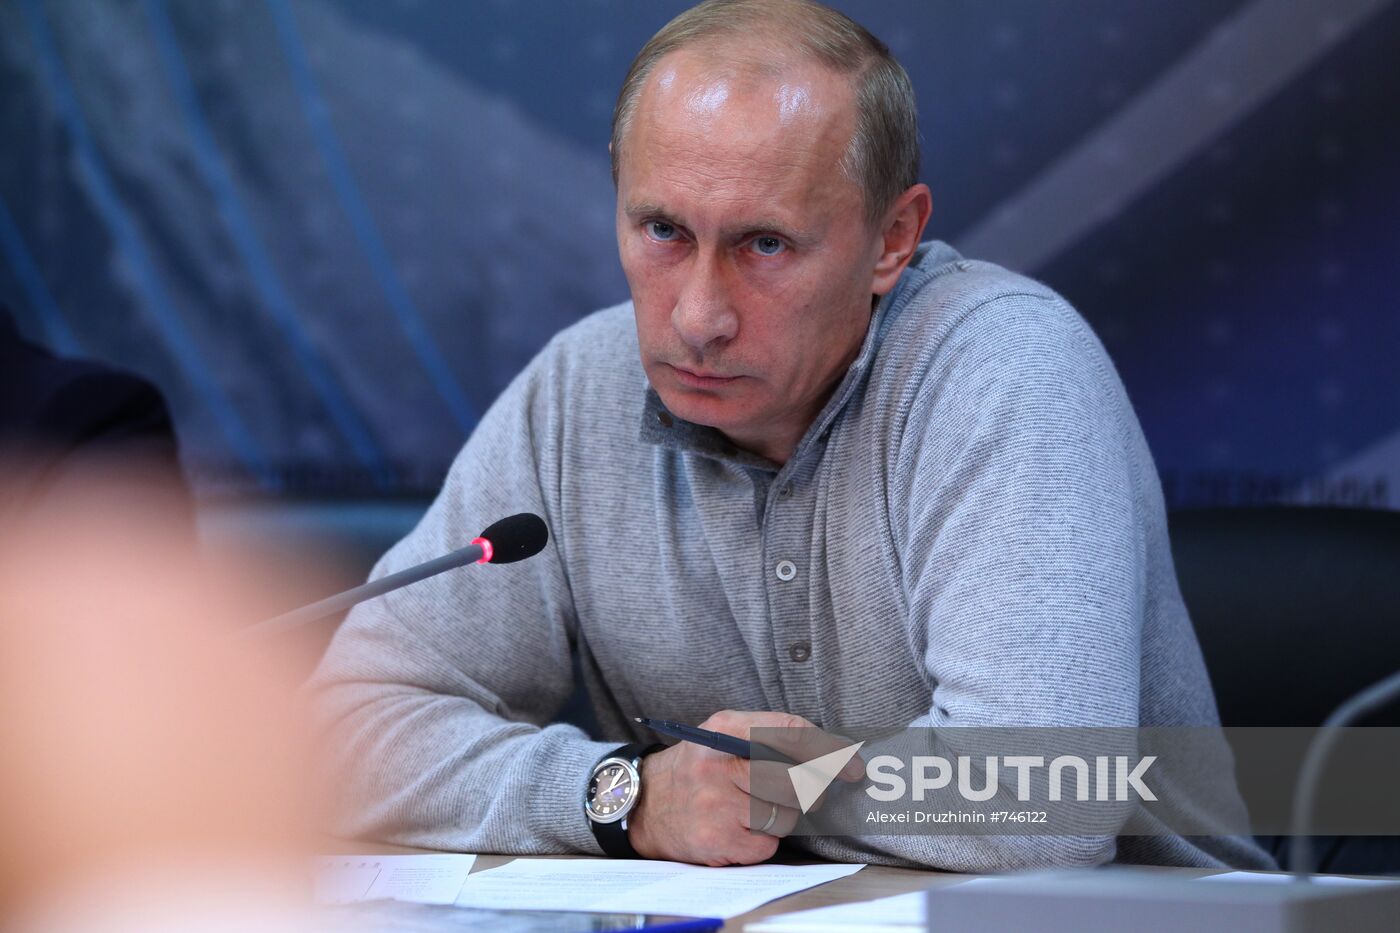 Vladimir Putin holds meeting in Petropavlovsk-Kamchatsky